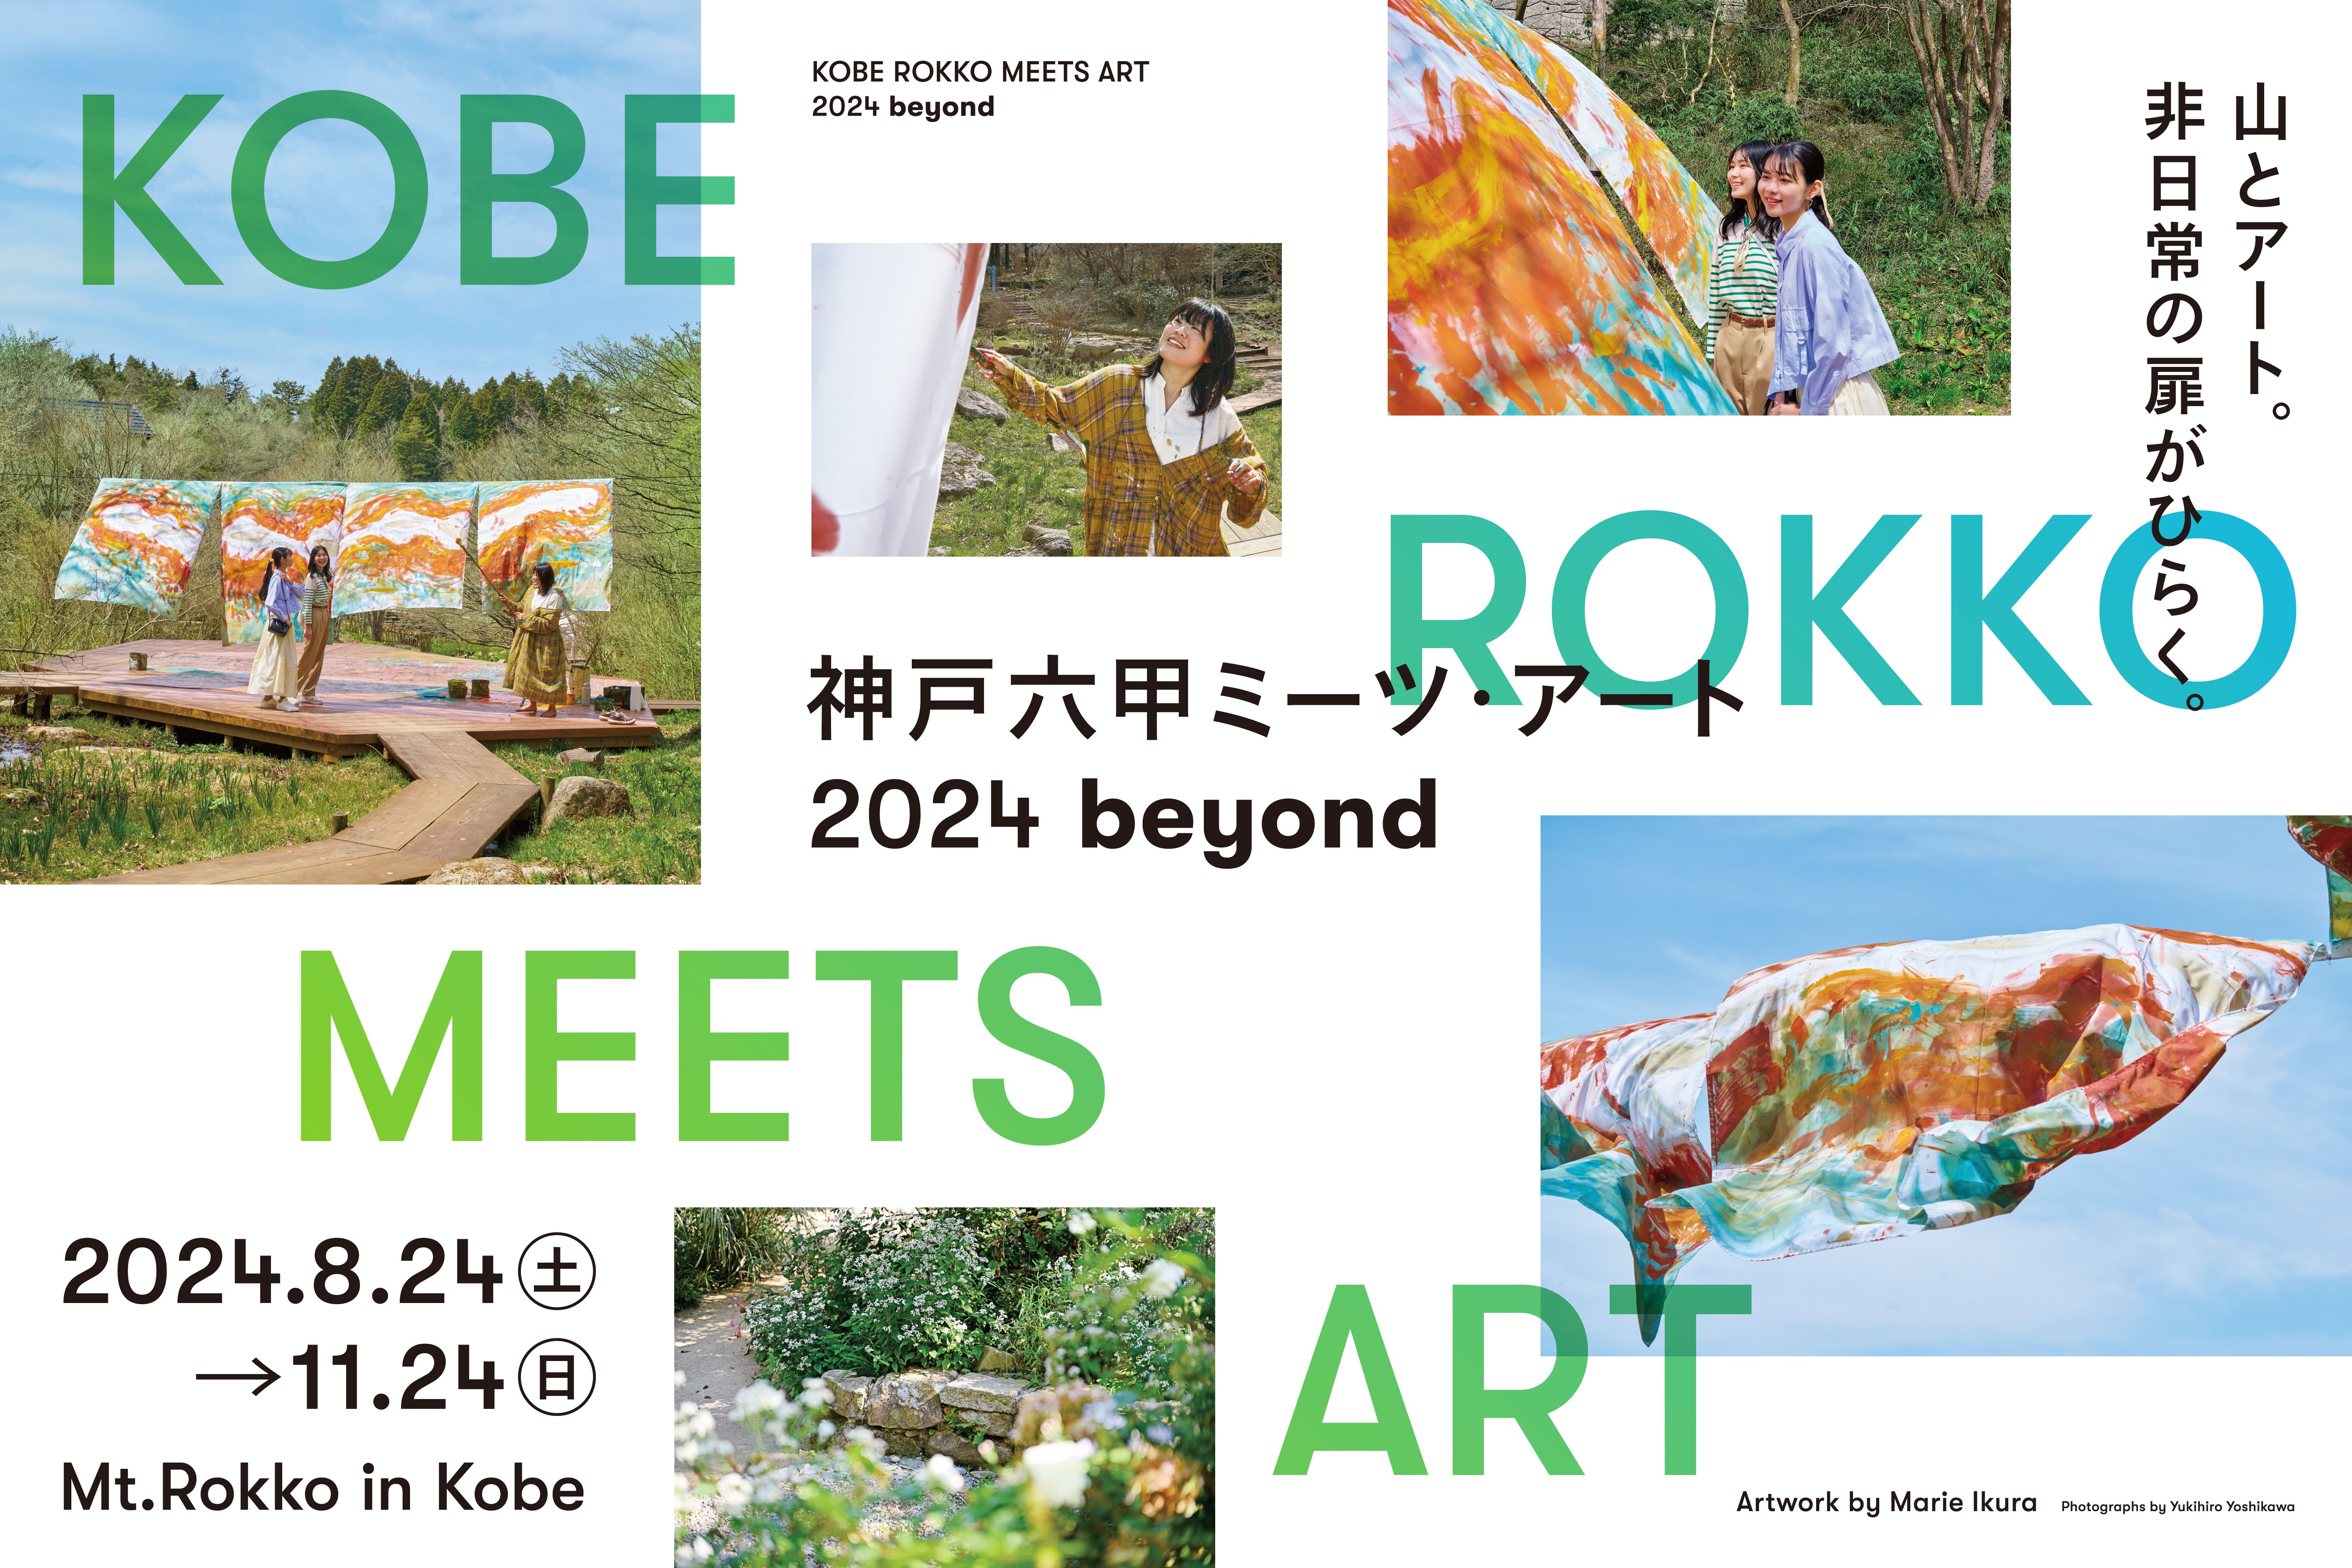 Kobe Rokko Meets Art 2024 "beyond"